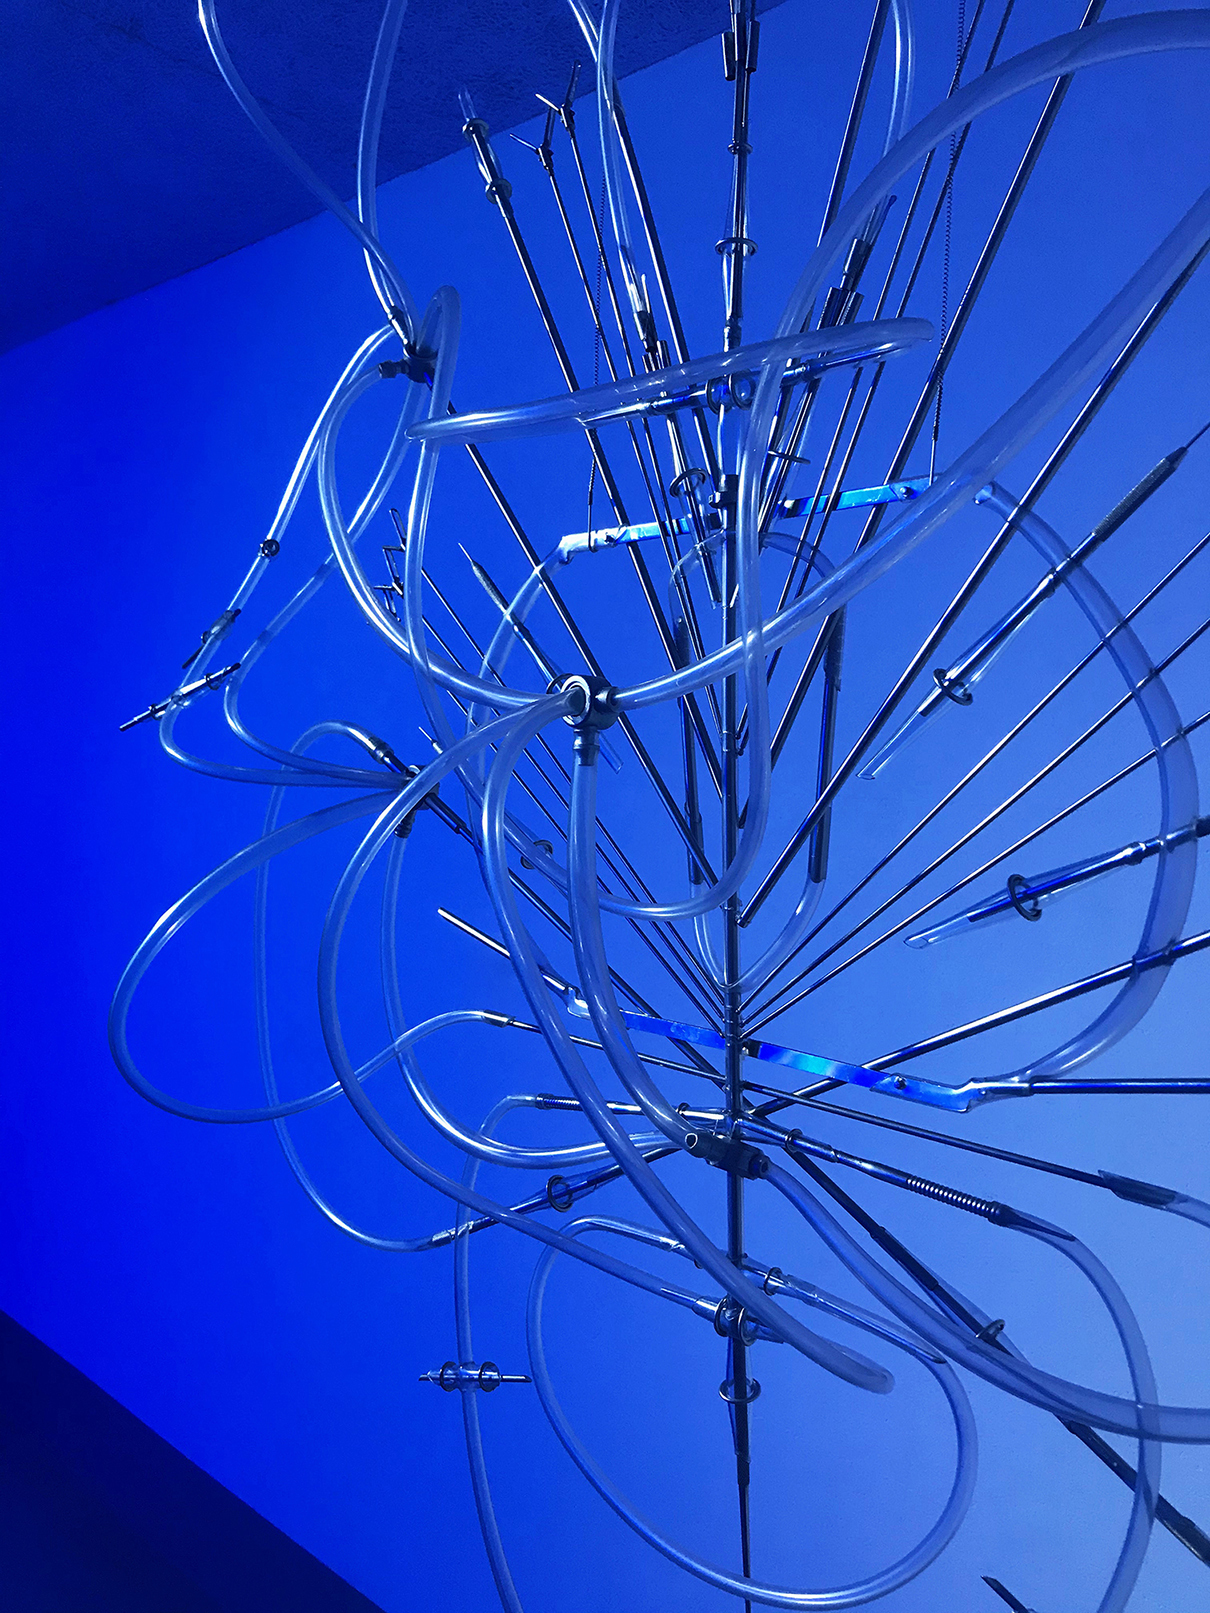 Floryan Varennes, Iris, 2020 Medical tubes, medical instruments, blue light; 100 x 130 cm